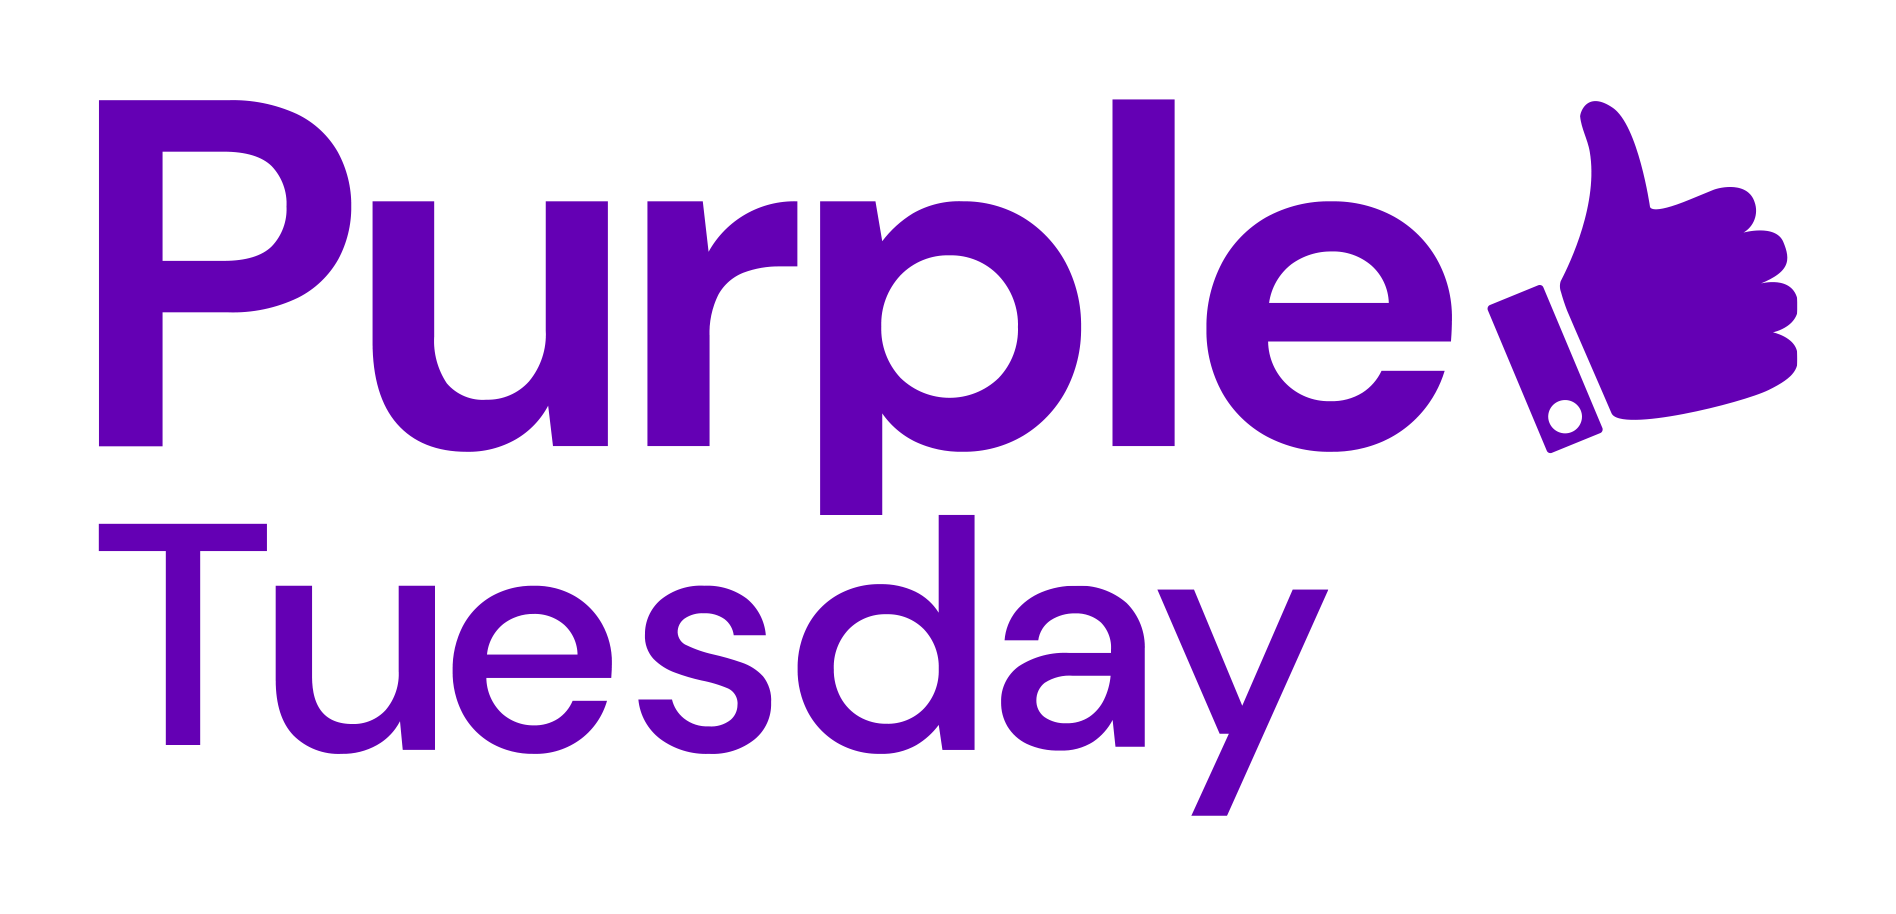 Purple Tuesday logo